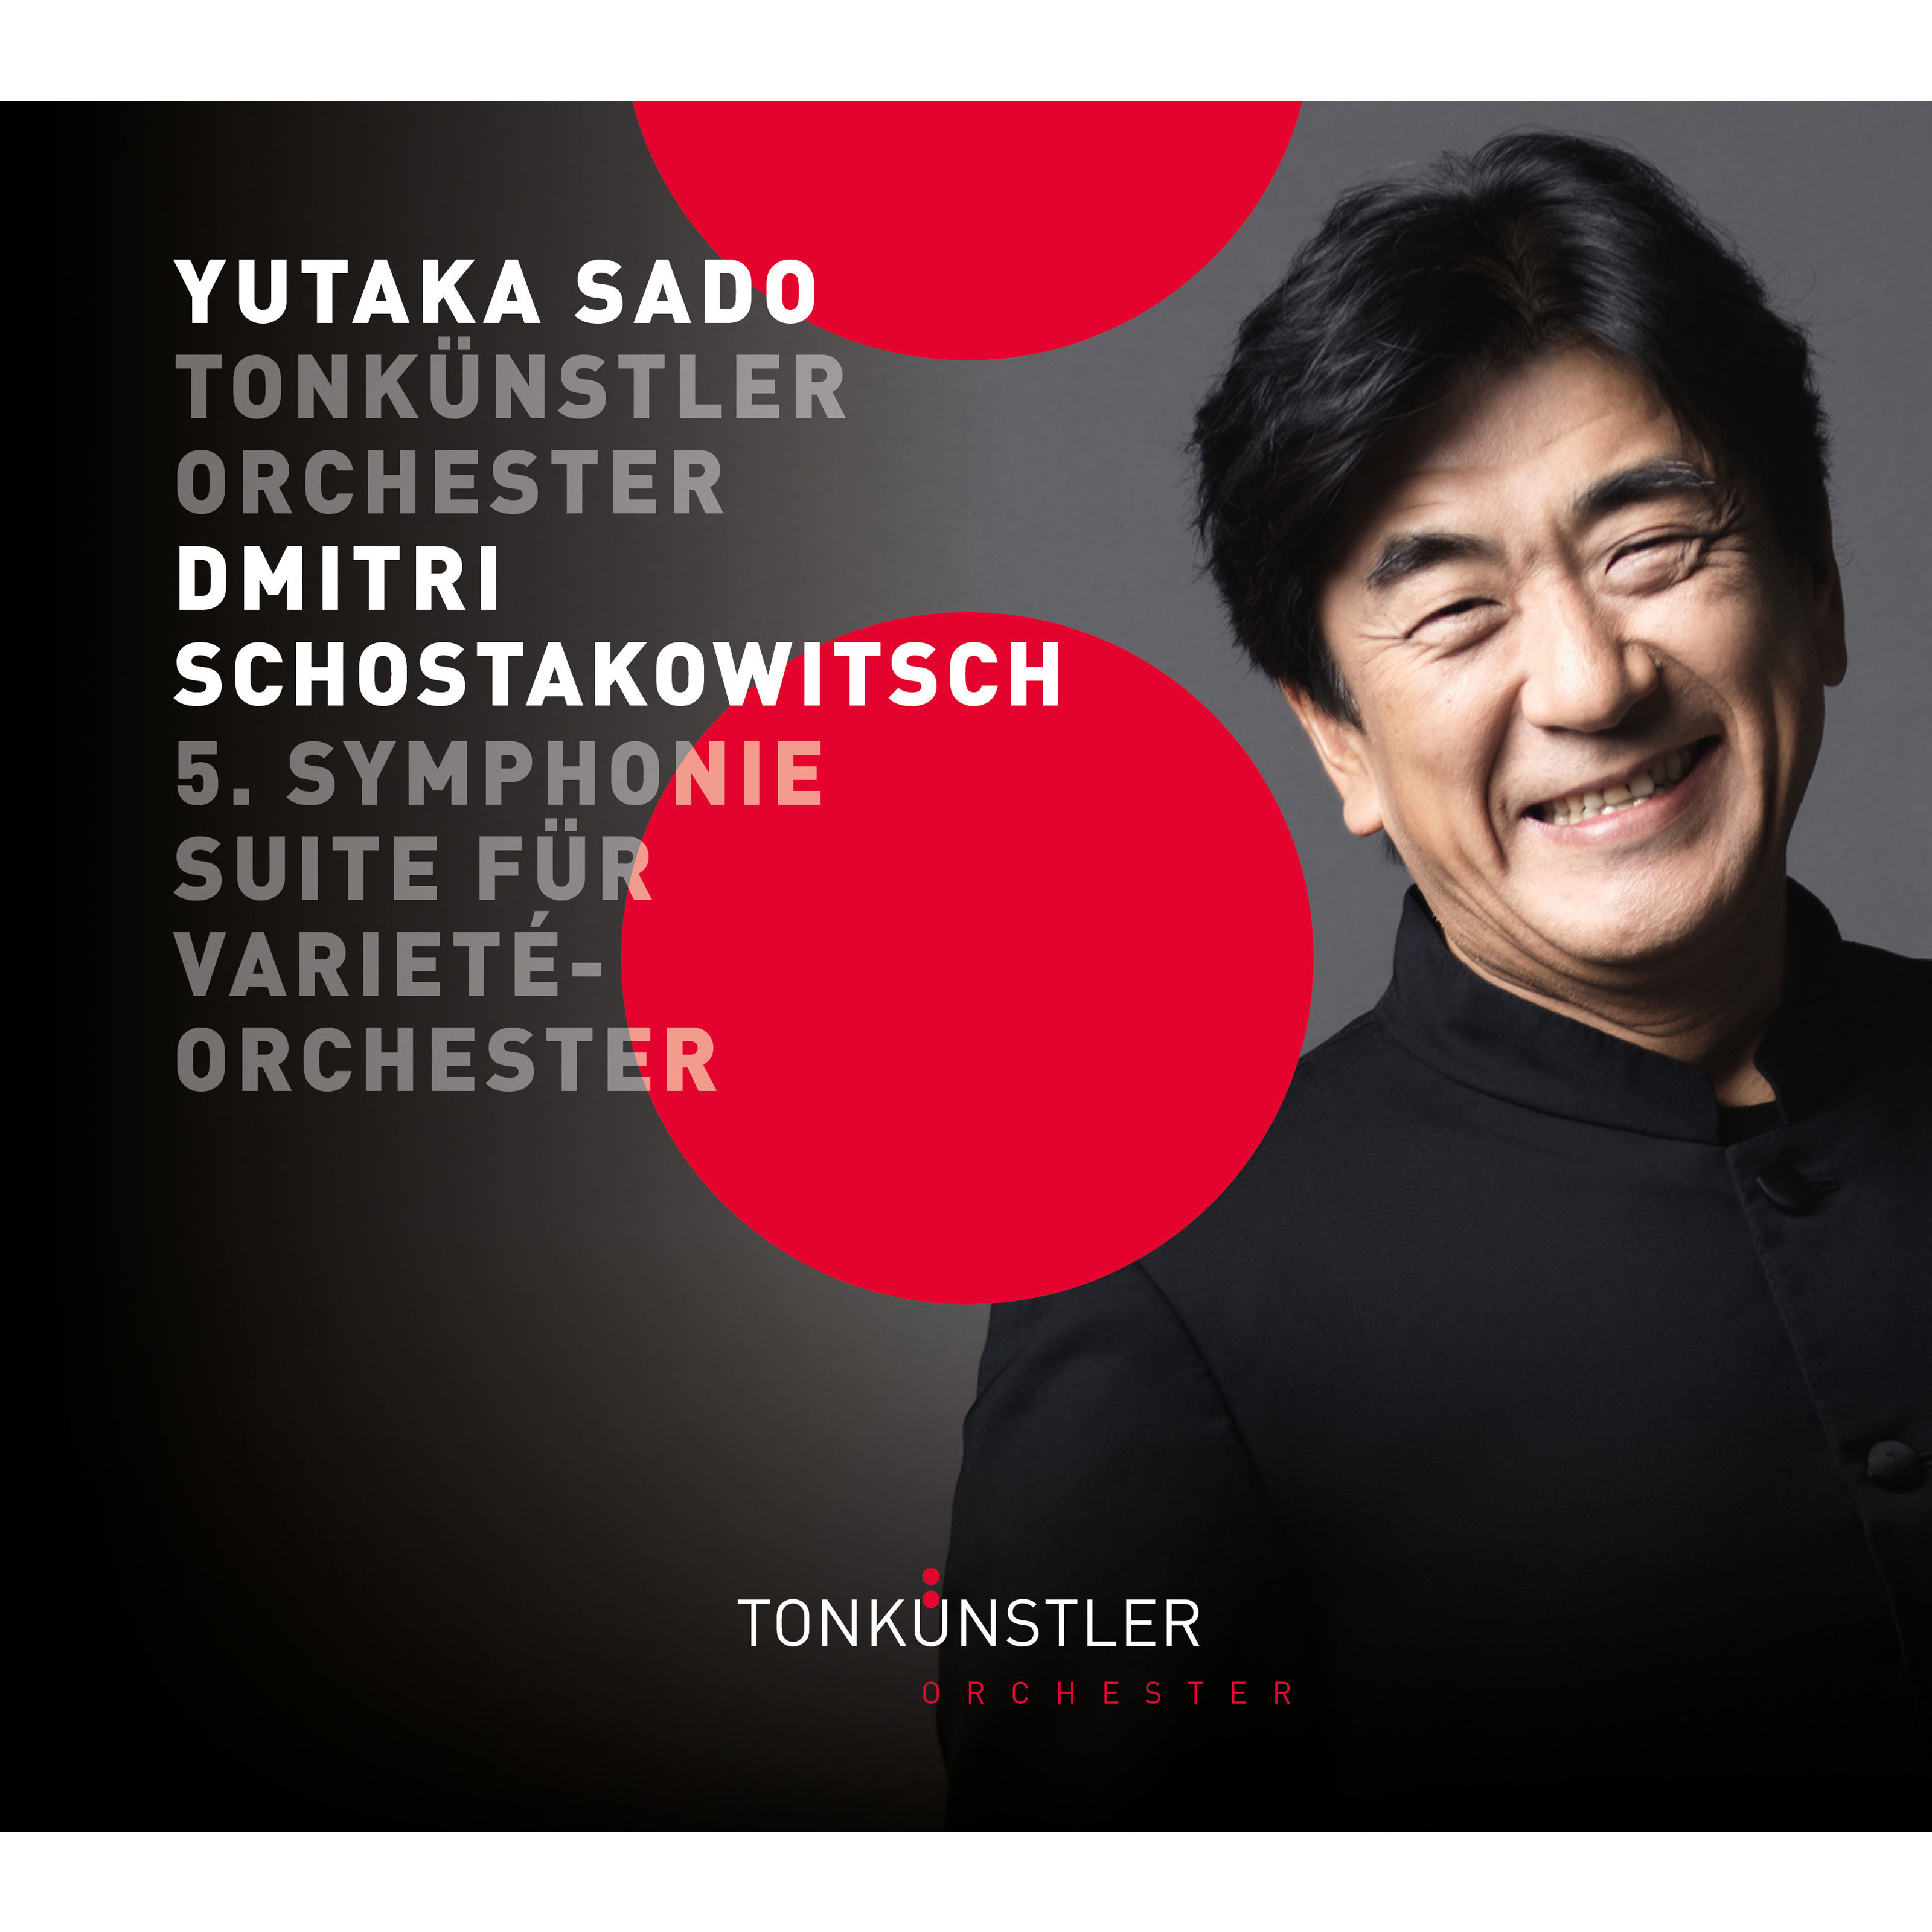 Tonkünstler Orchester – Shostakovich- Symphony No. 5 & Suite for Variety Orchestra